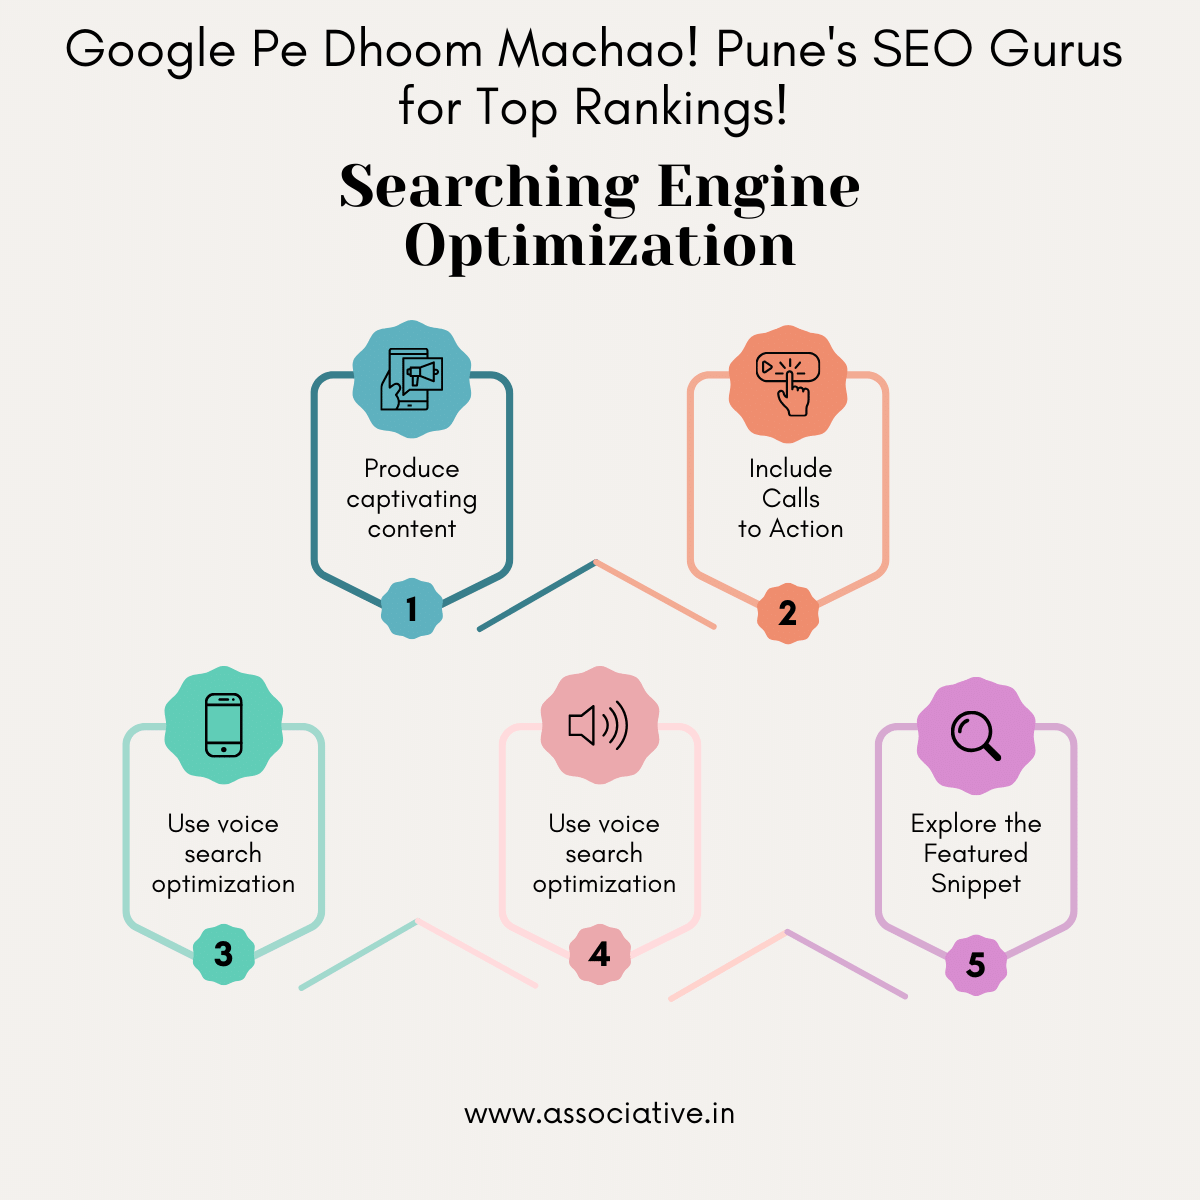 Google Pe Dhoom Machao! Pune's SEO Gurus for Top Rankings!